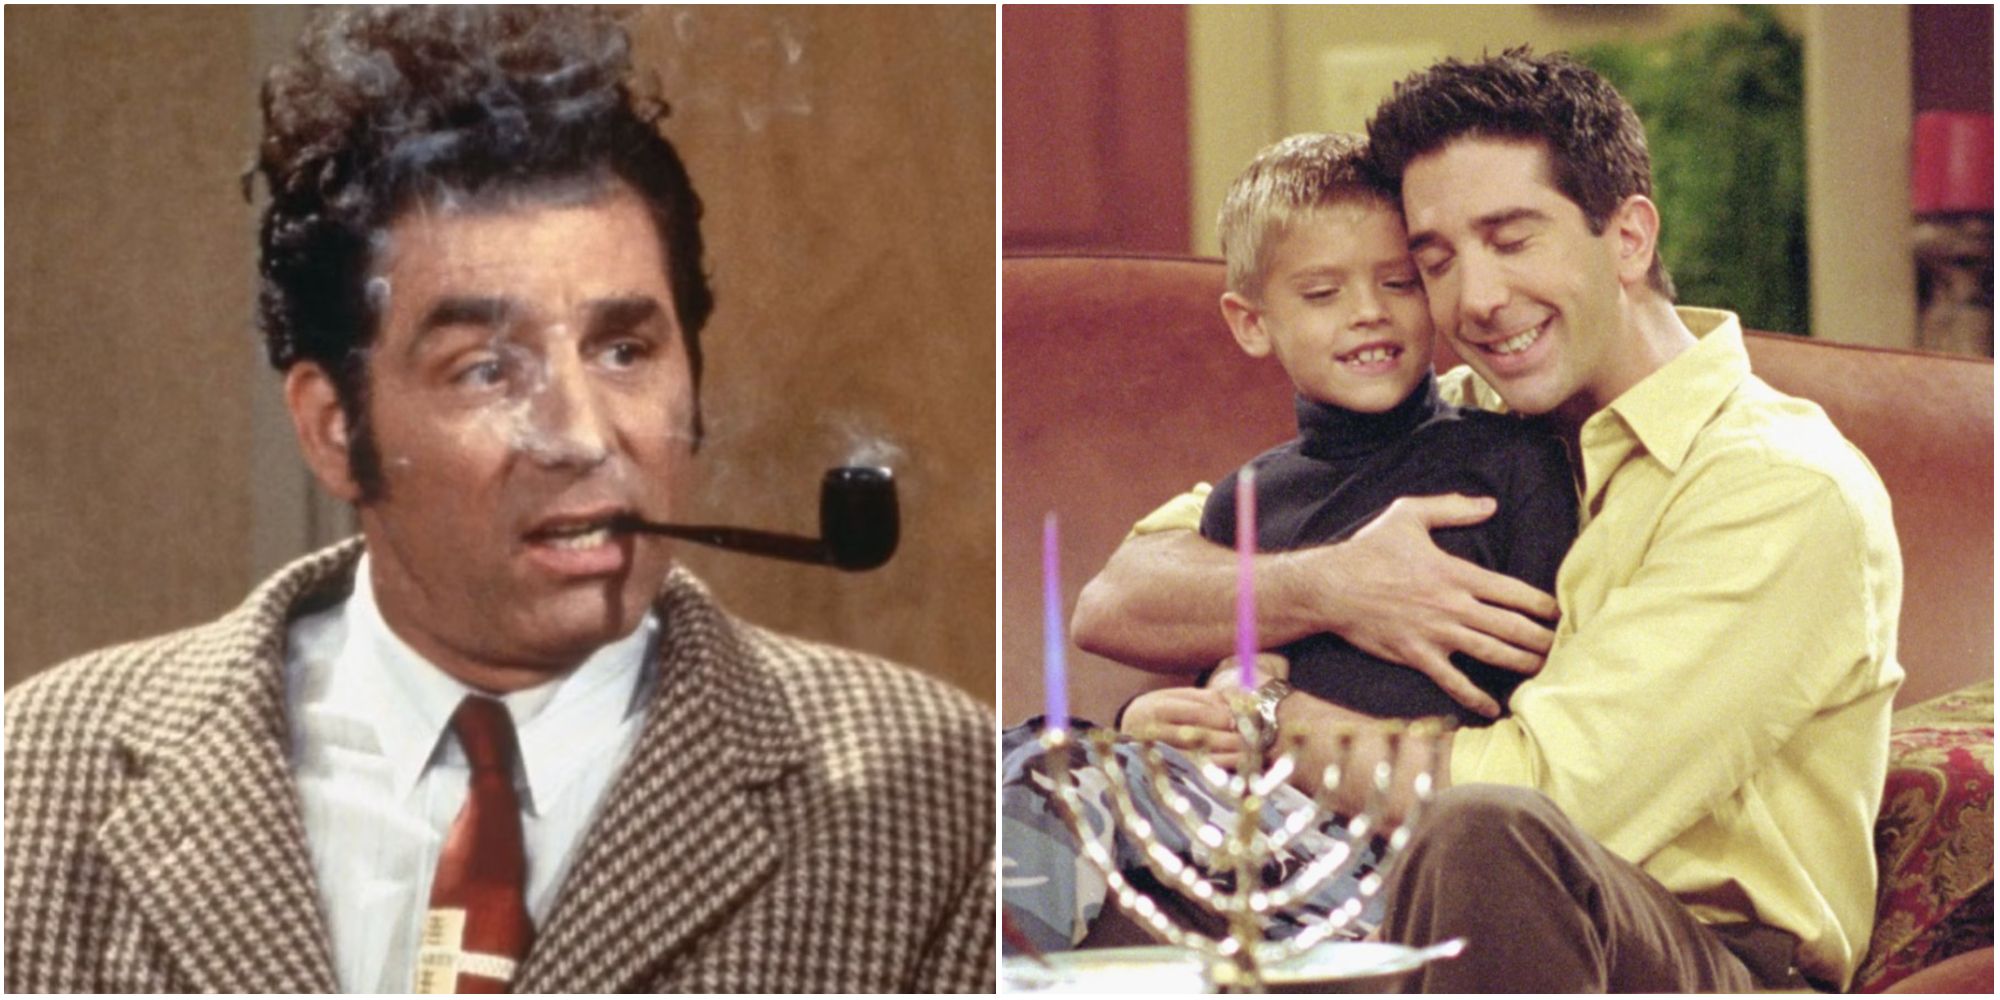 Kramer in Seinfeld and Ross in Friends